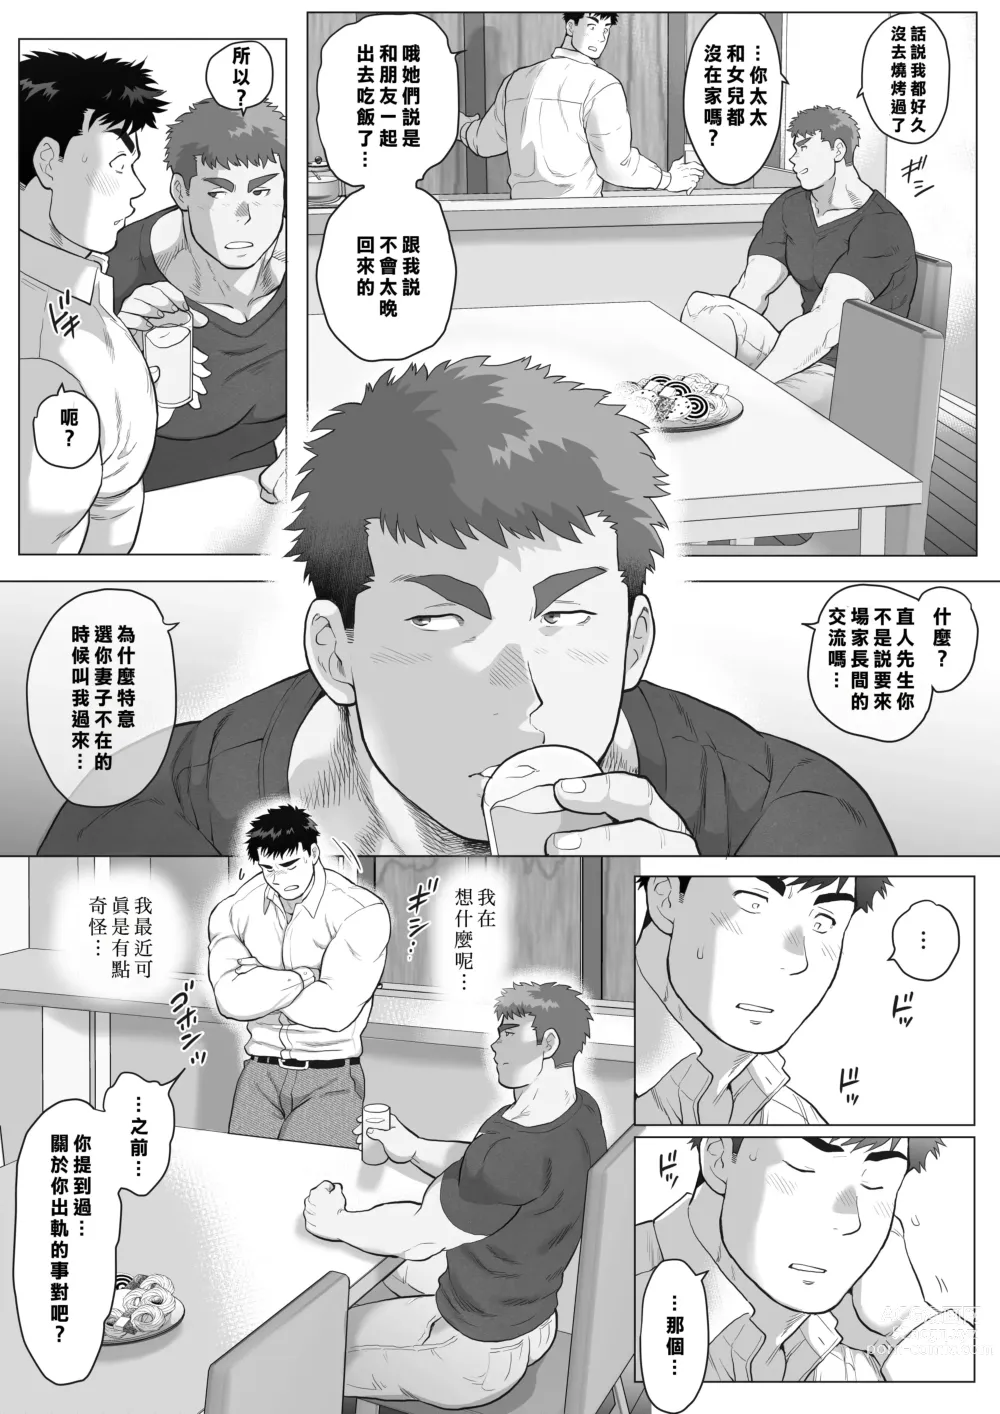 Page 18 of manga 直人爸爸与友幸爸爸 第一话